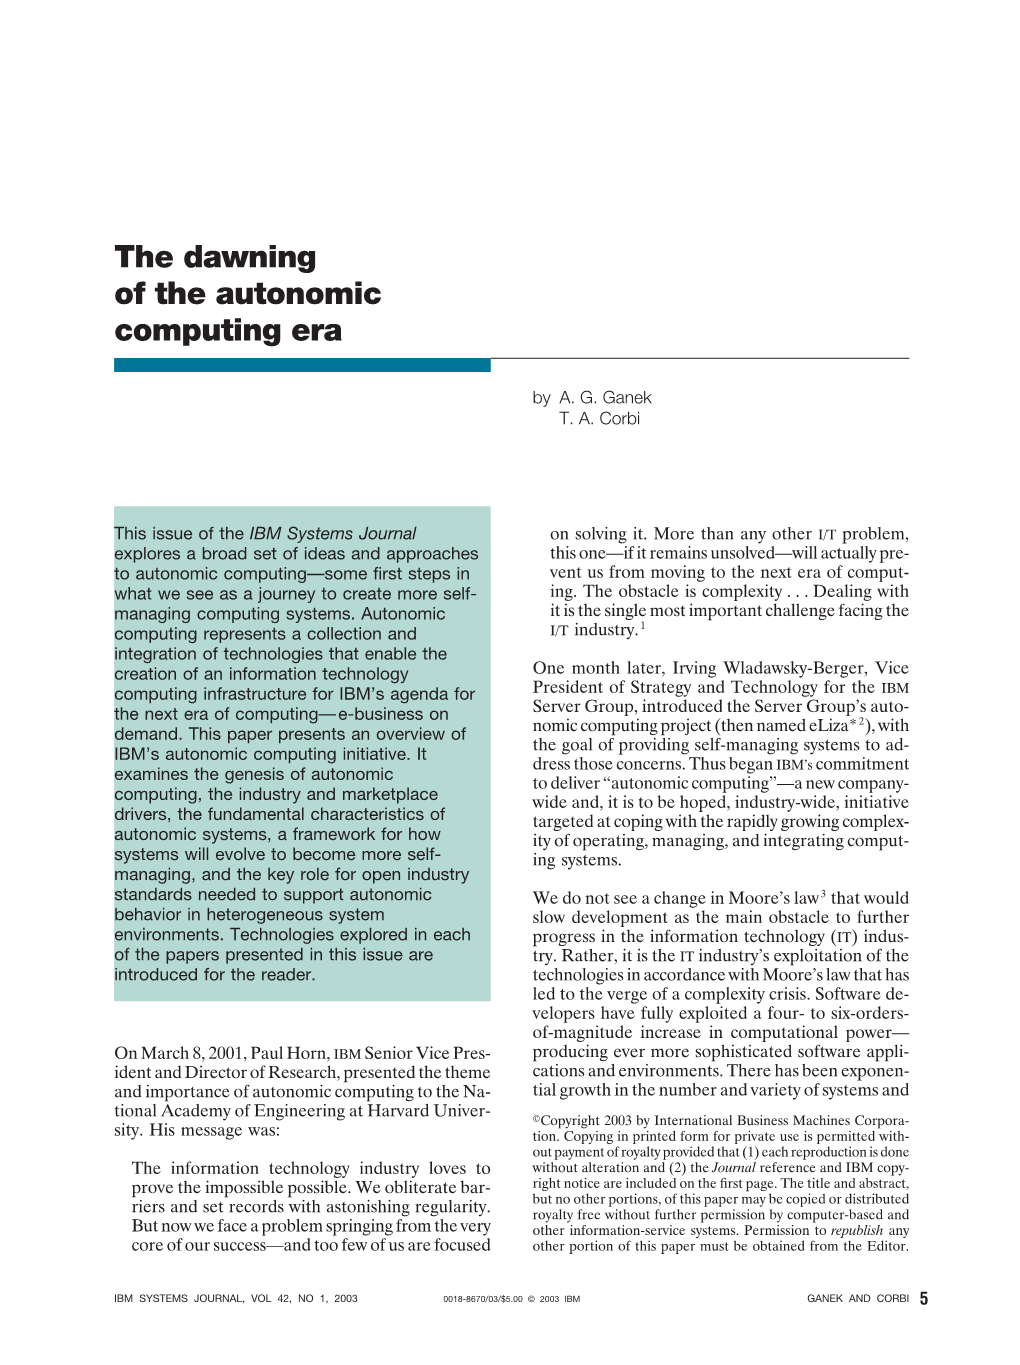 The Dawning of the Autonomic Computing Era